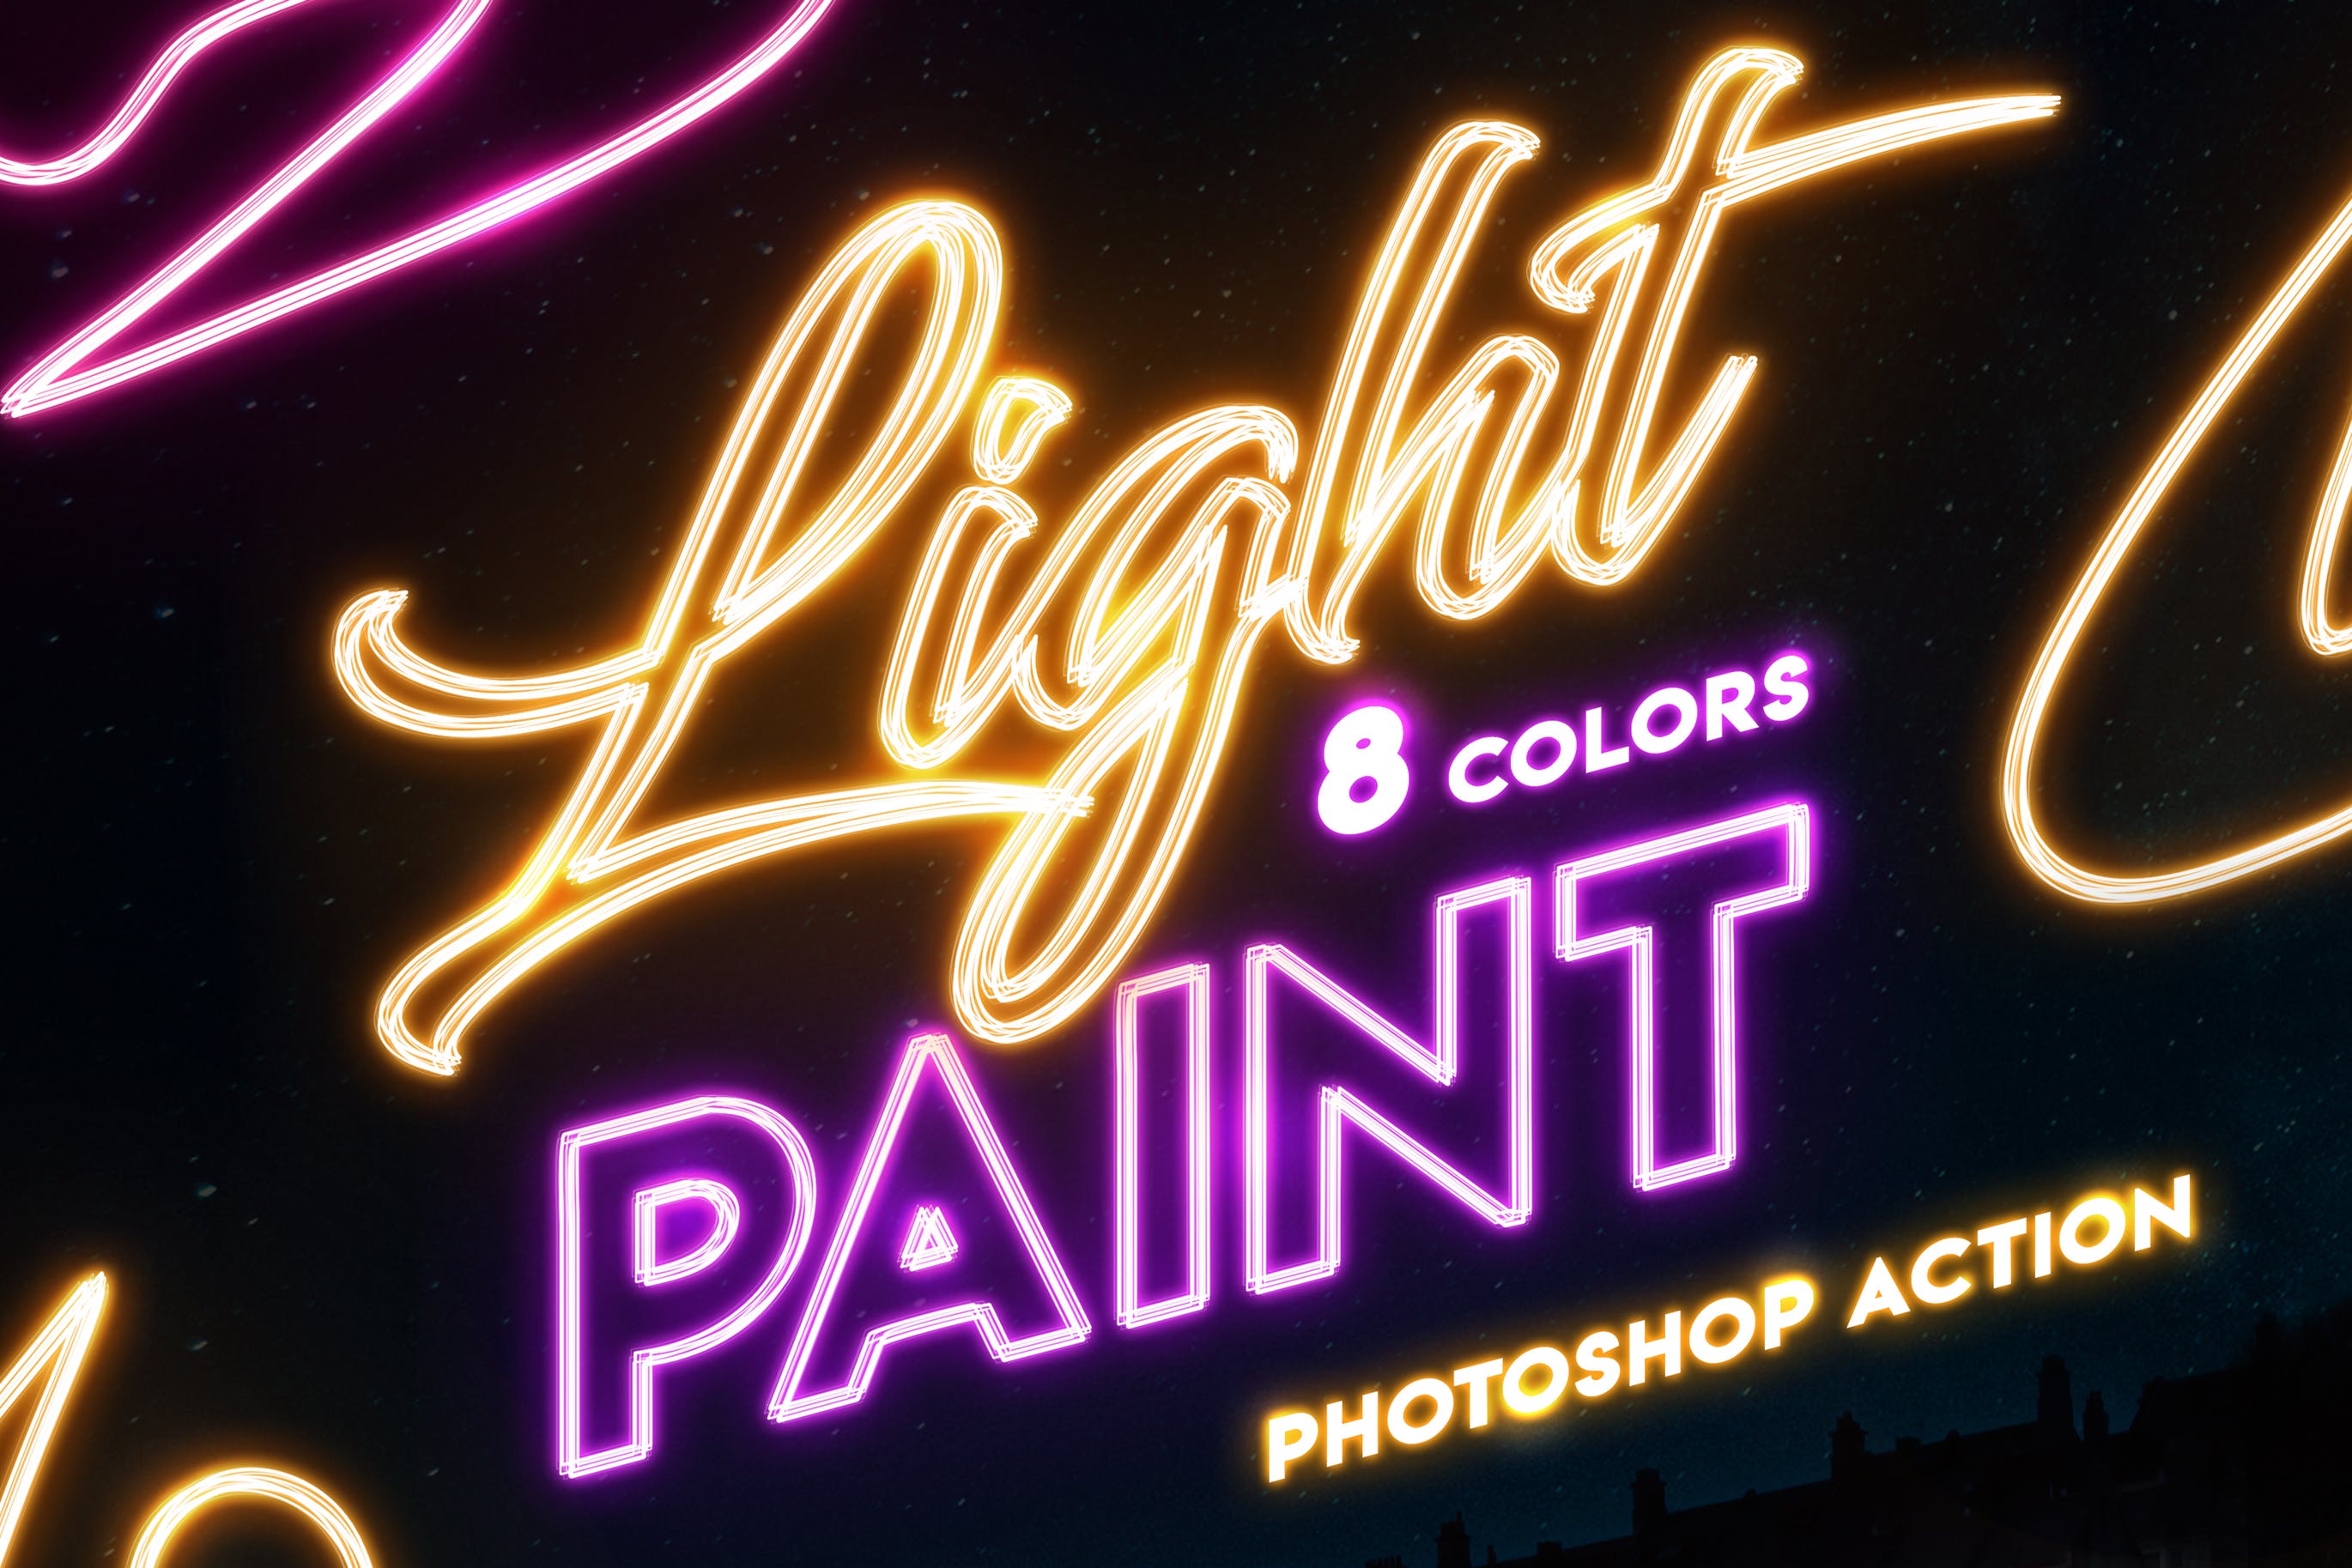 霓虹灯发光字体特效PS动作 Light Painting – Photoshop Action插图